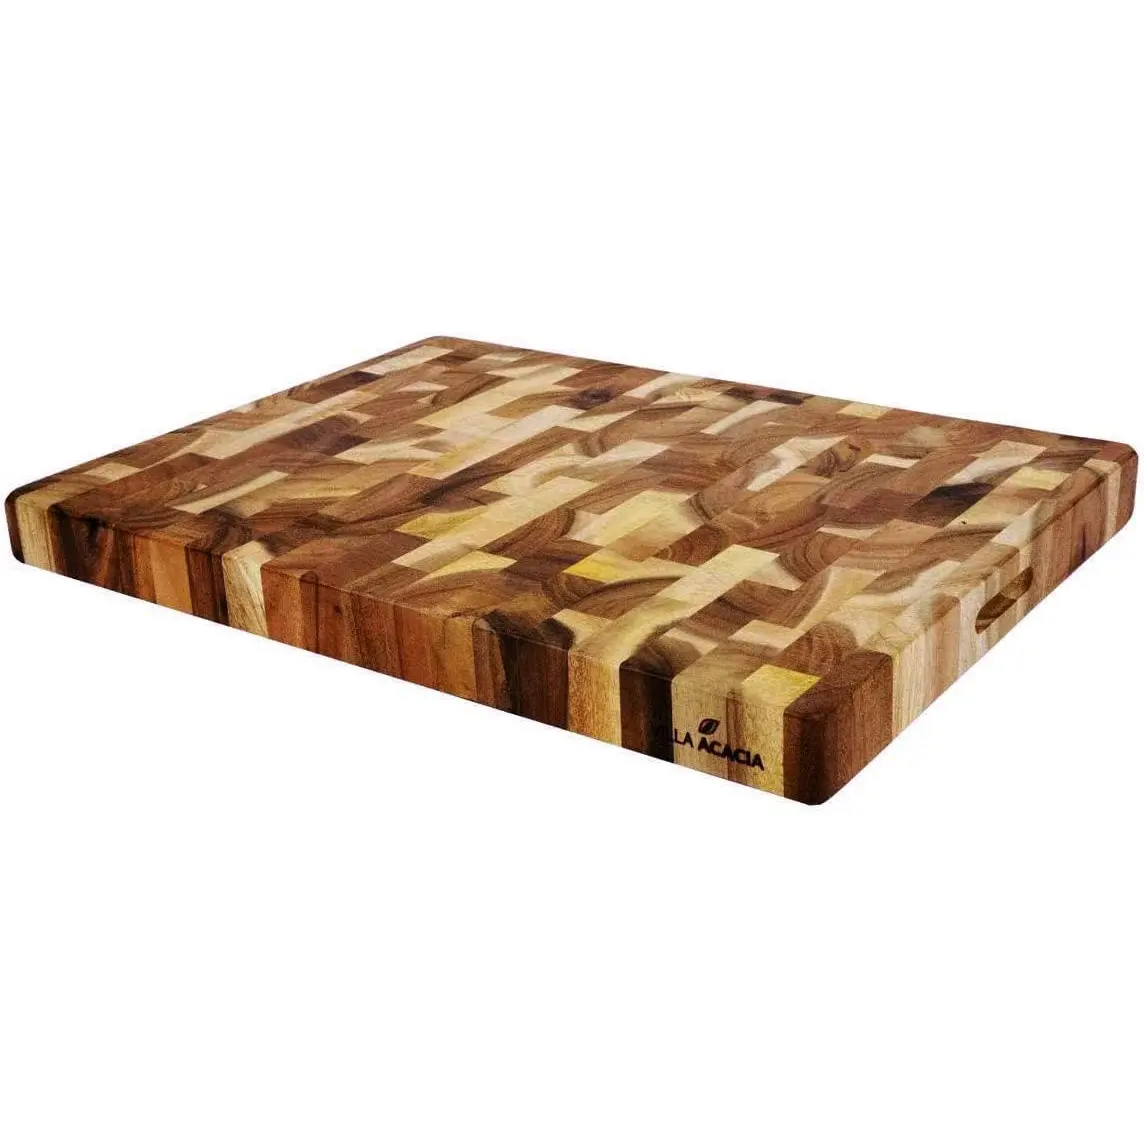 Acacia Oversized Butcher Block 60.96 x 45.72x 5.08cm thick big wooden cutting board Acacia wood cutting board